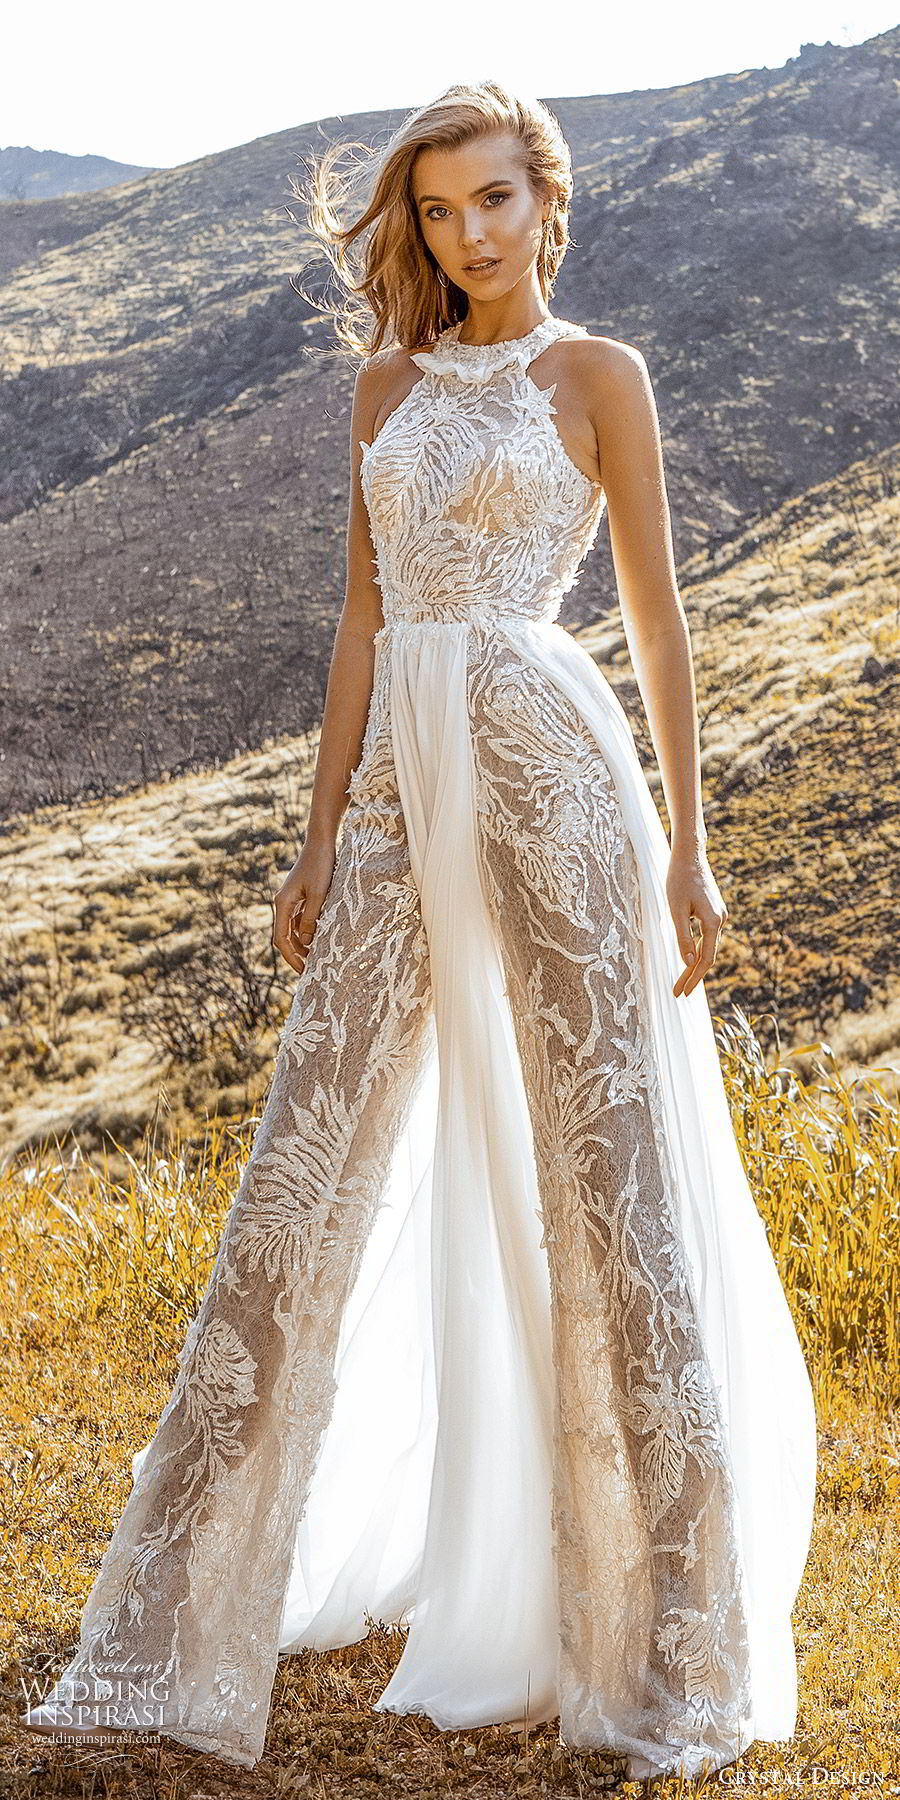 crystal design 2020 couture bridal sleeveless halter neckline jumpsuit wedding dress a line skirt slit (5) modern chic romantic mv